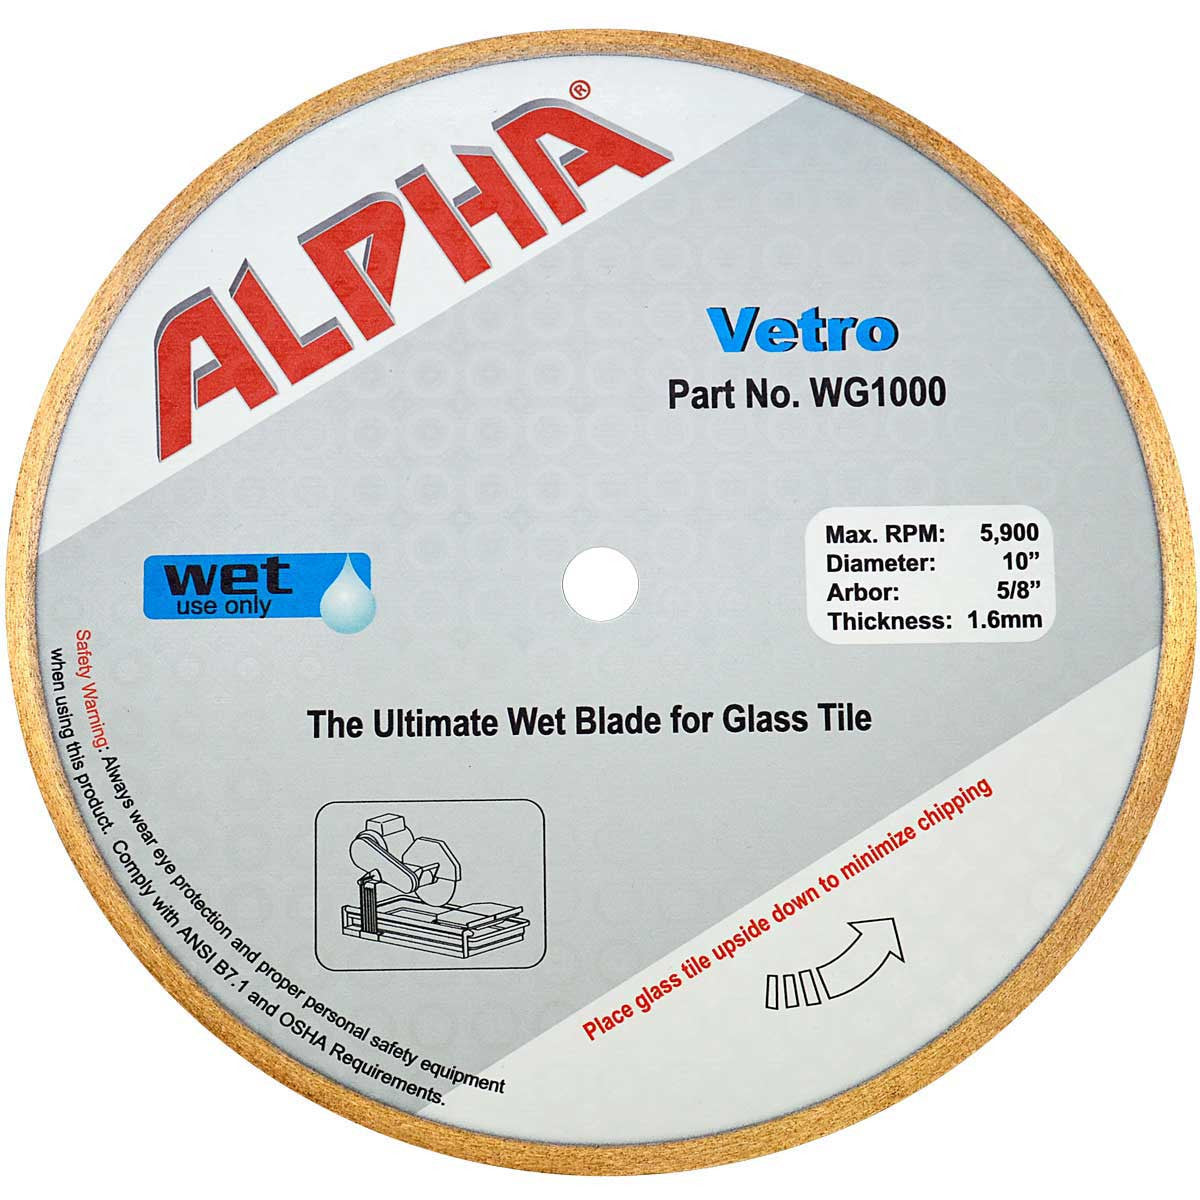 Alpha WG1000 10" Vetro Glass Diamond Saw Blade 5/8" Arbor Japan